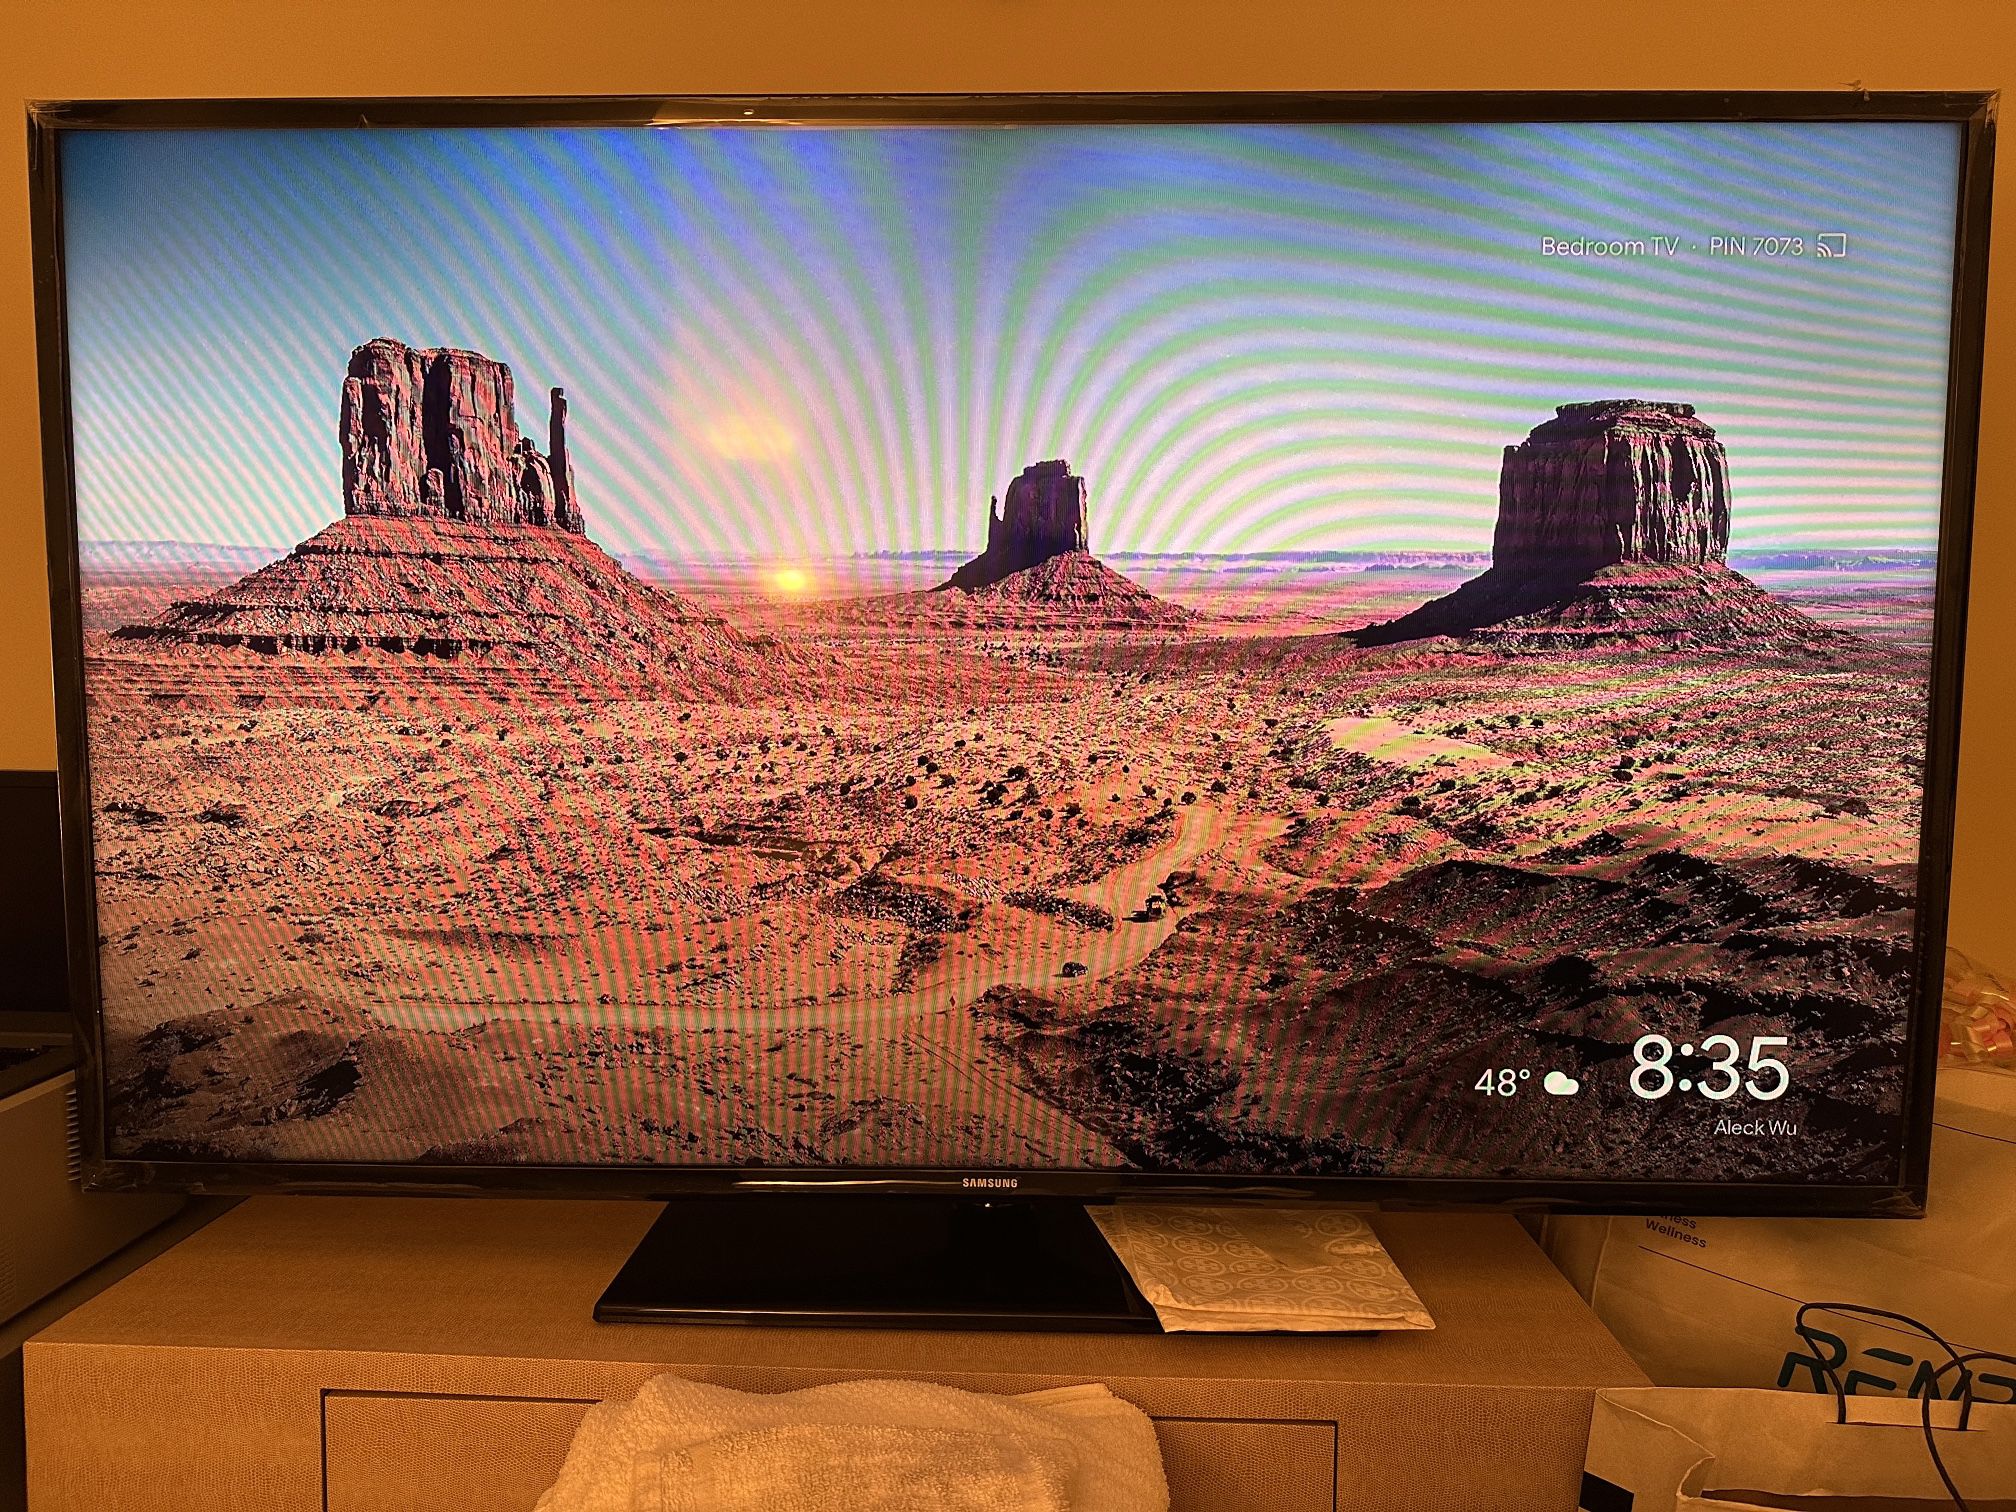 Samsung 60 Inch 1080p LED TV